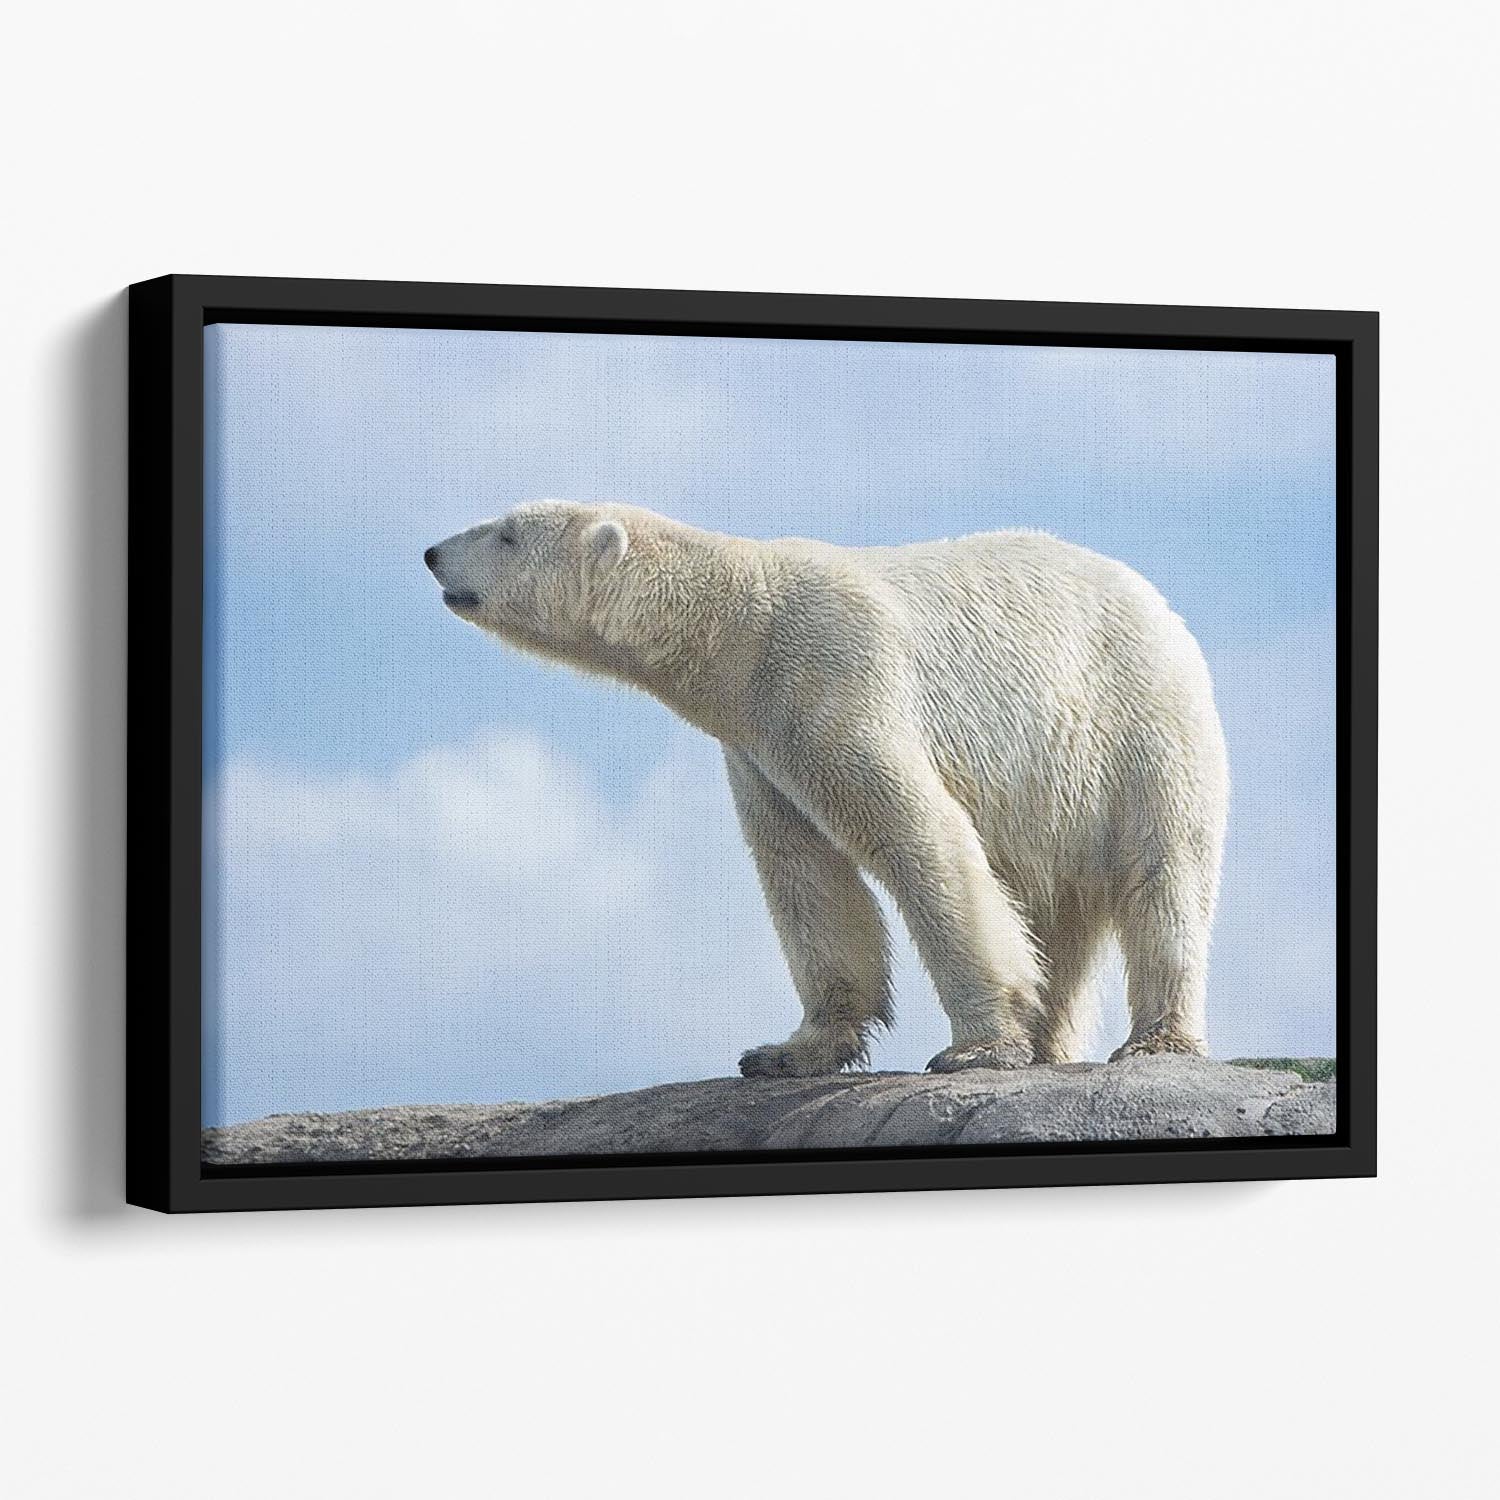 Polar bear walking on rocks Floating Framed Canvas - Canvas Art Rocks - 1